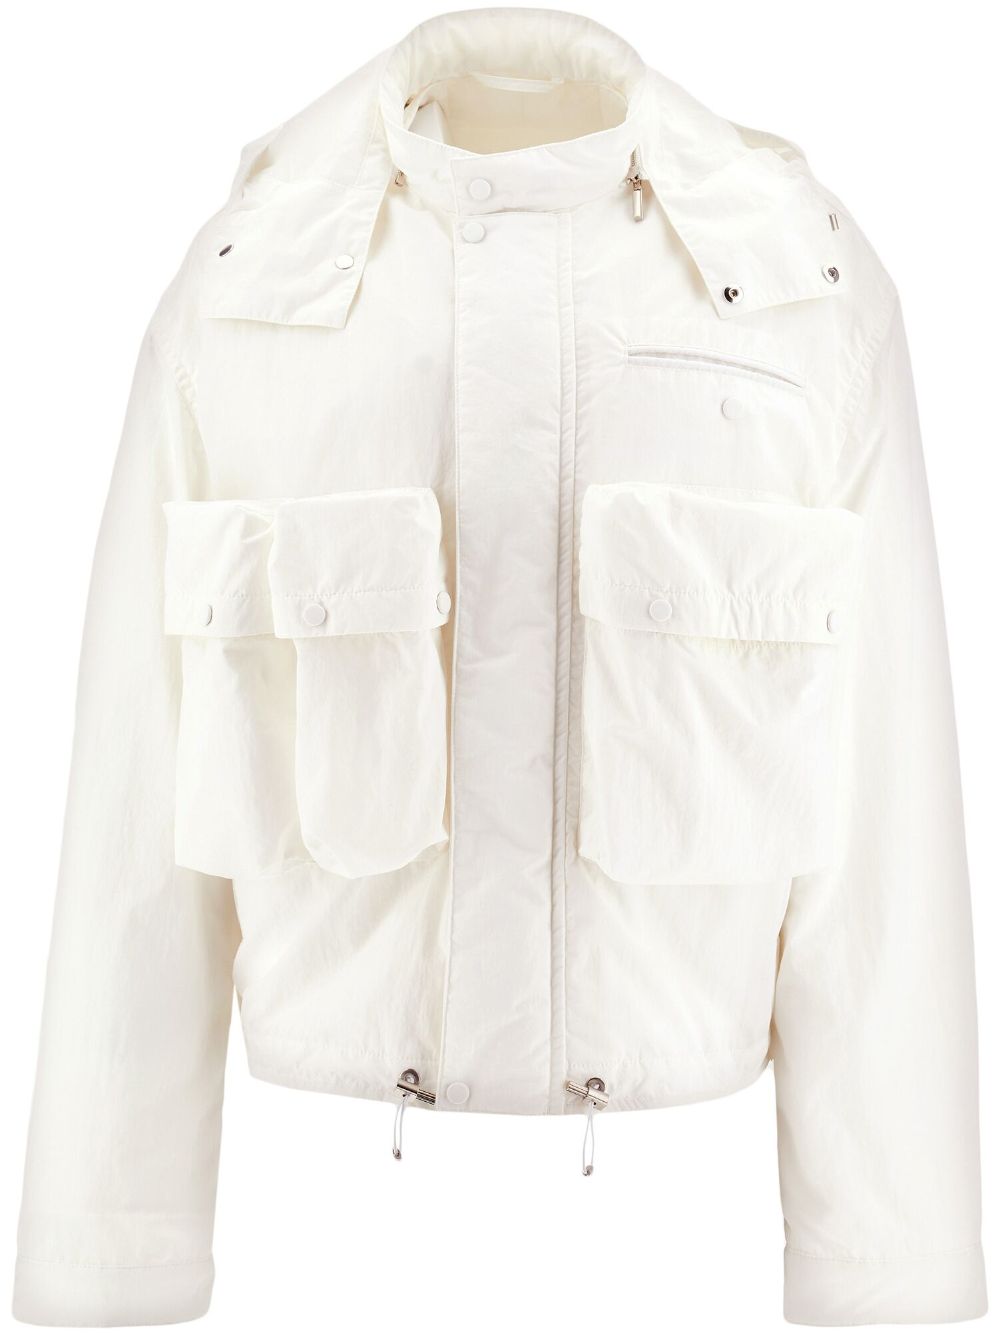 Ferragamo Jacke mit abnehmbarer Kapuze - Weiß von Ferragamo